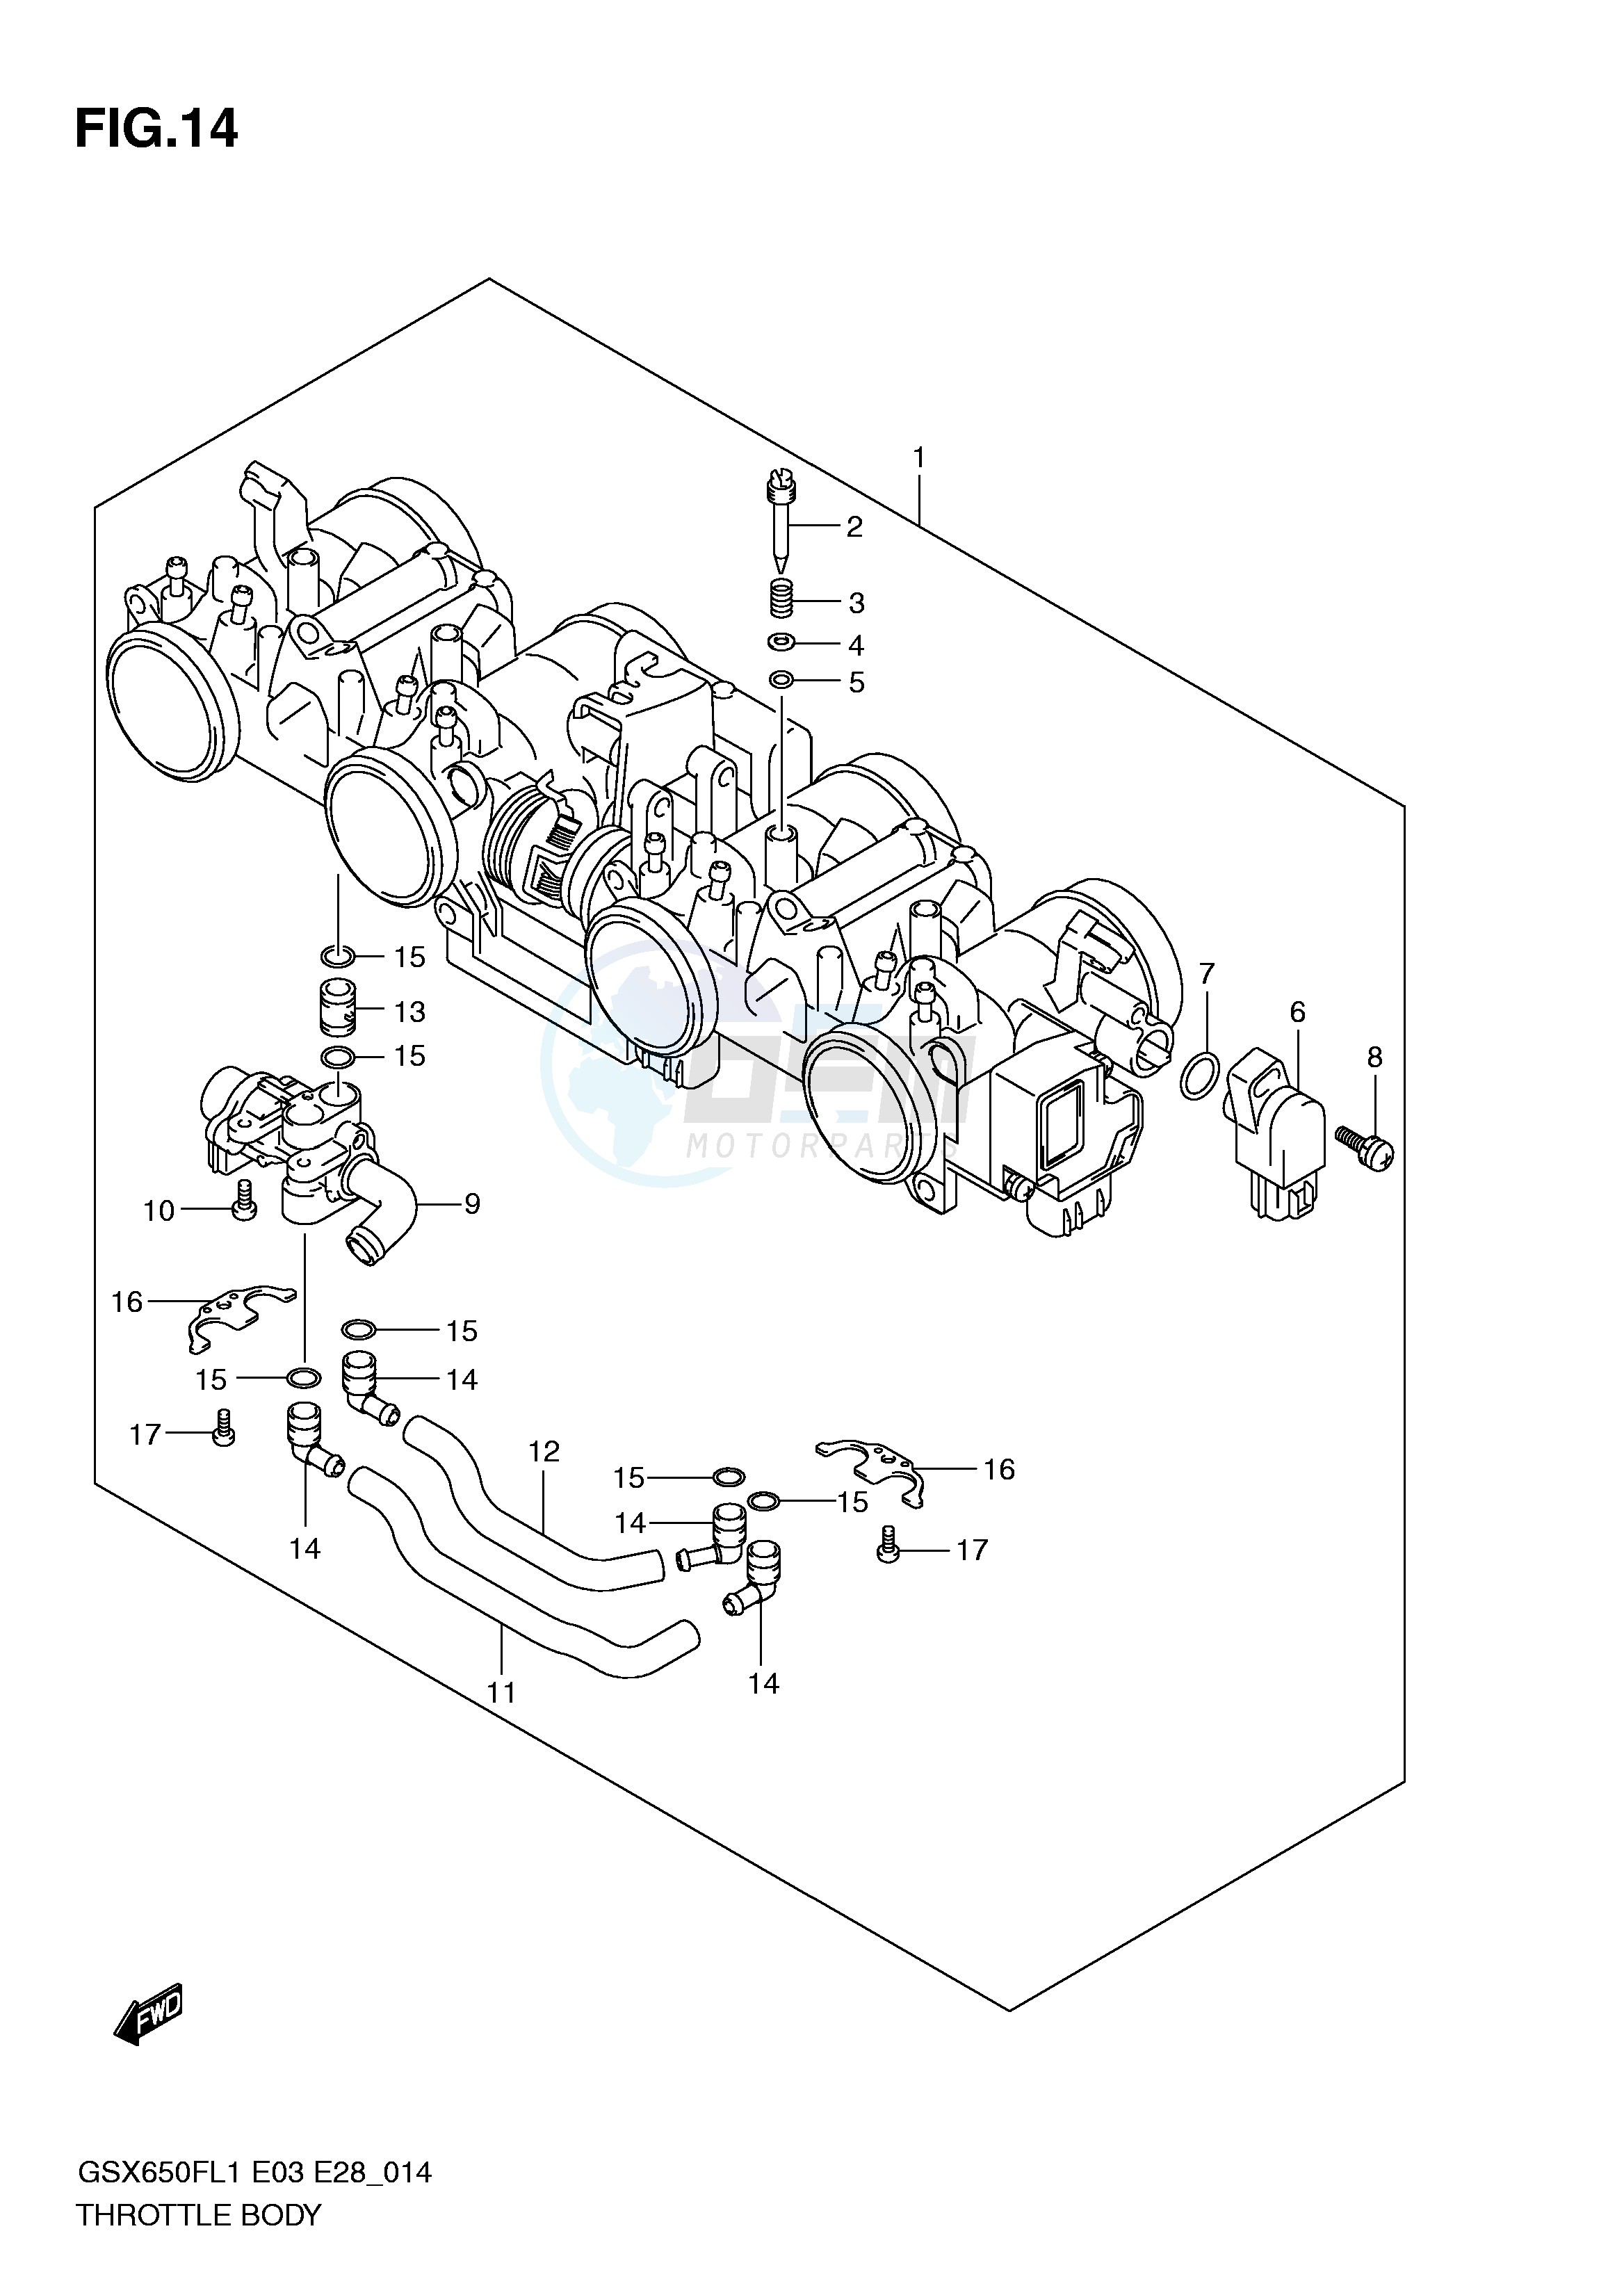 THROTTLE BODY (GSX650FL1 E33) blueprint